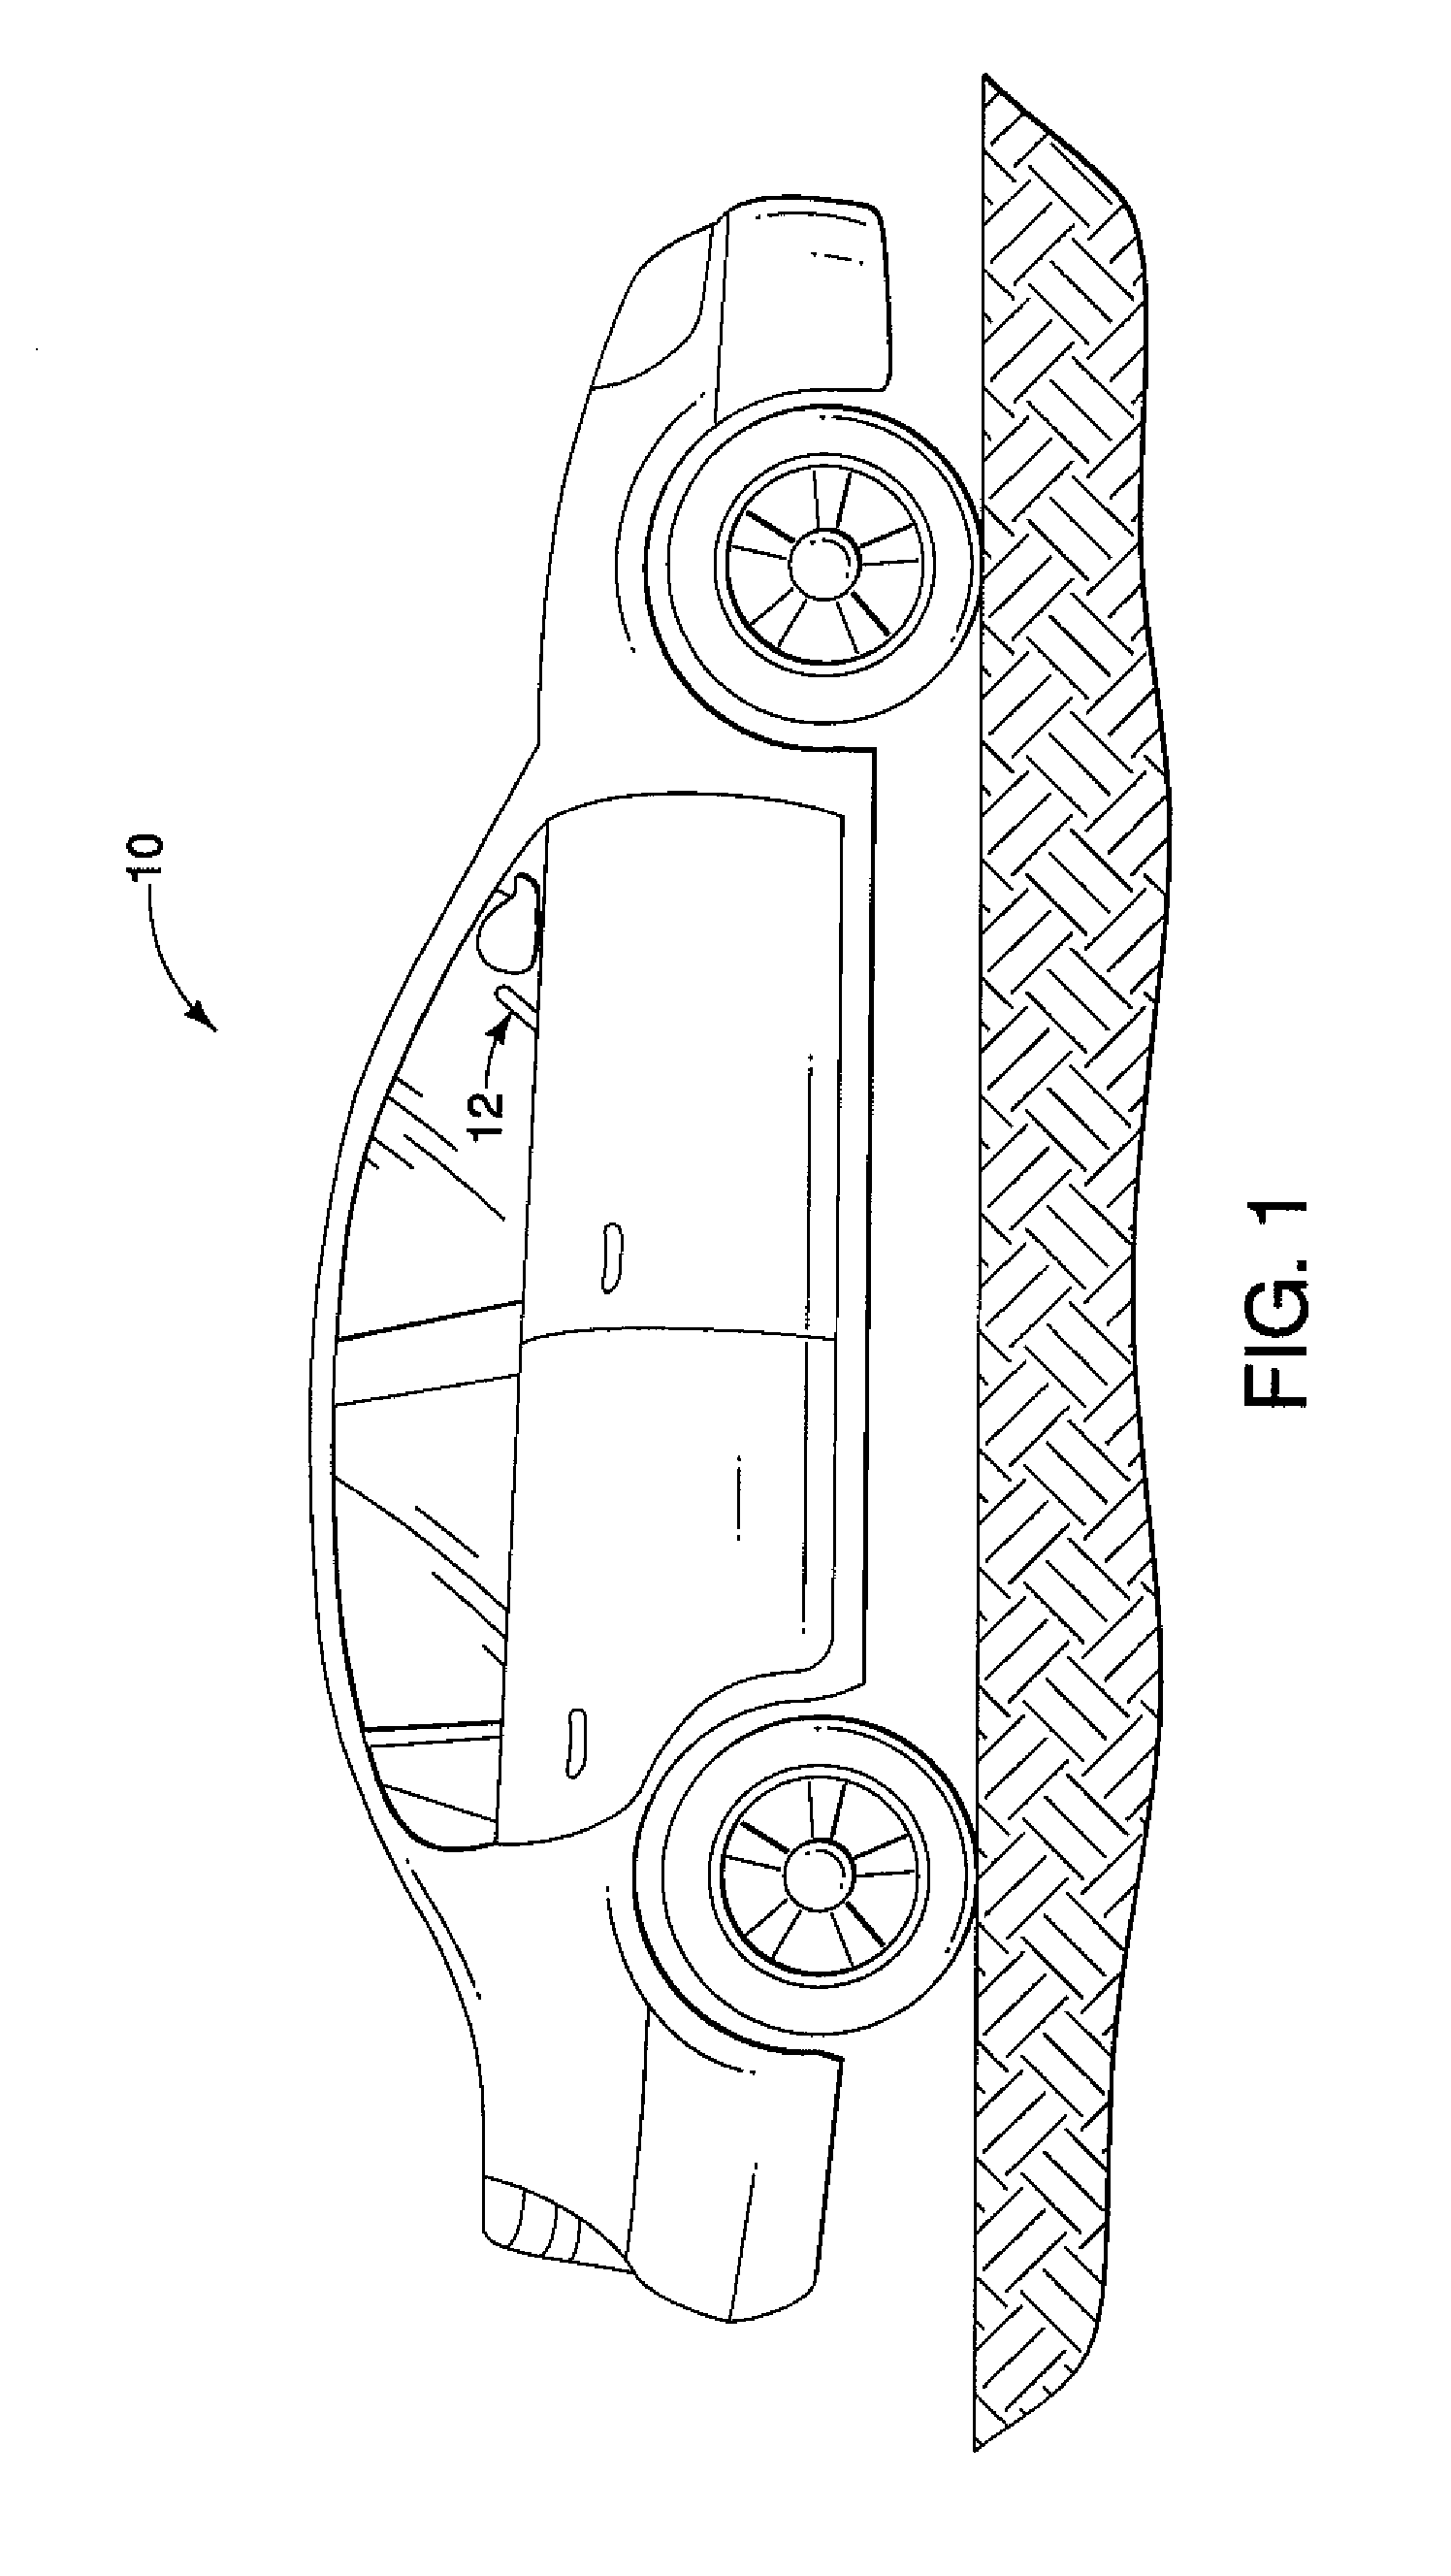 Vehicle steering column structure